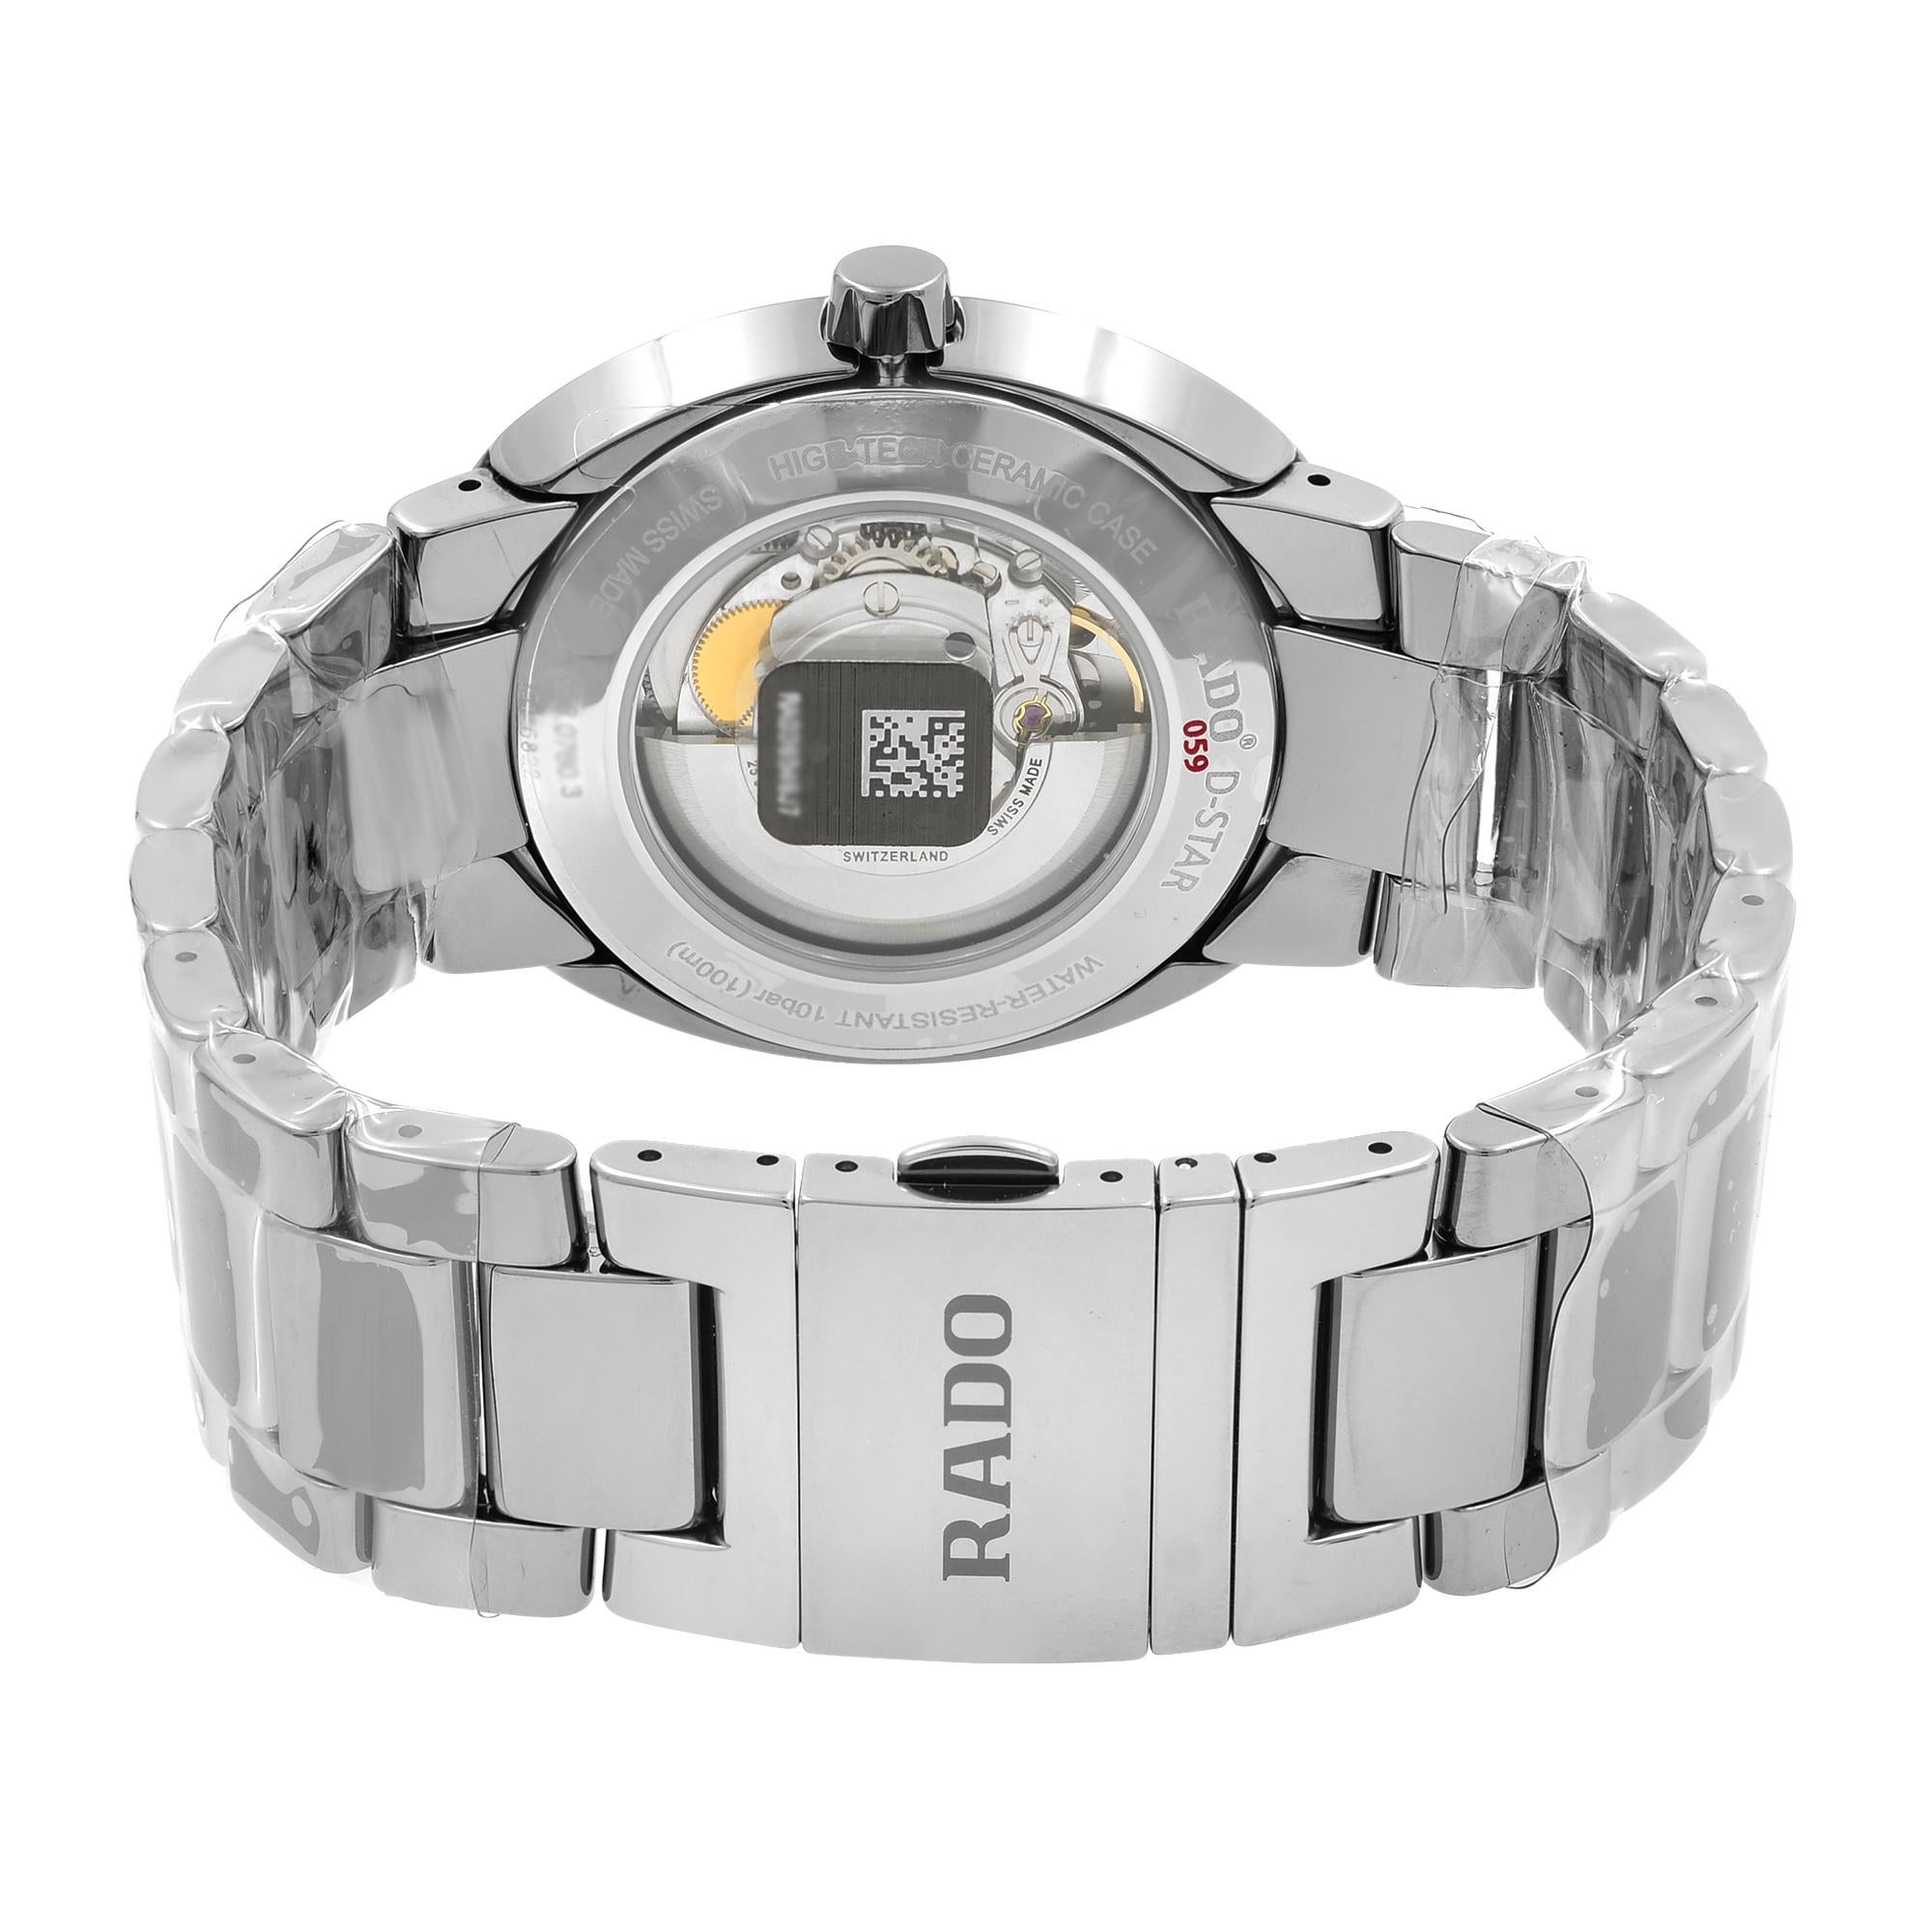 Rado D-Star Automatic Grey Dial Ceramic Men's Watch R15760112 2